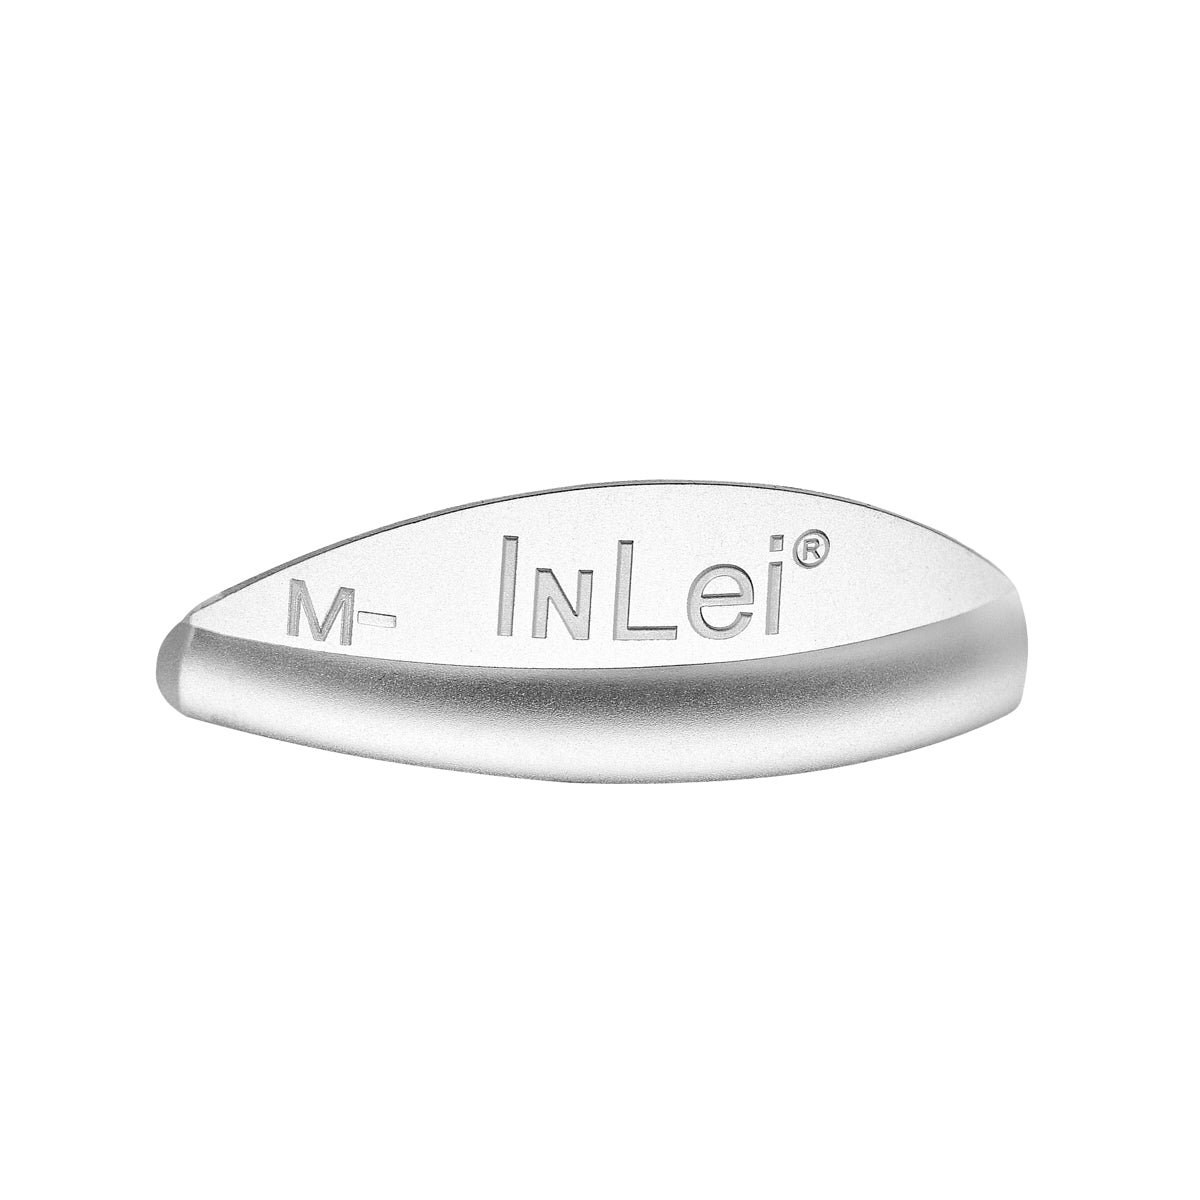 InLei® | Silicone Shields | 'ONE' | Medium 6 Pair - inlei.com